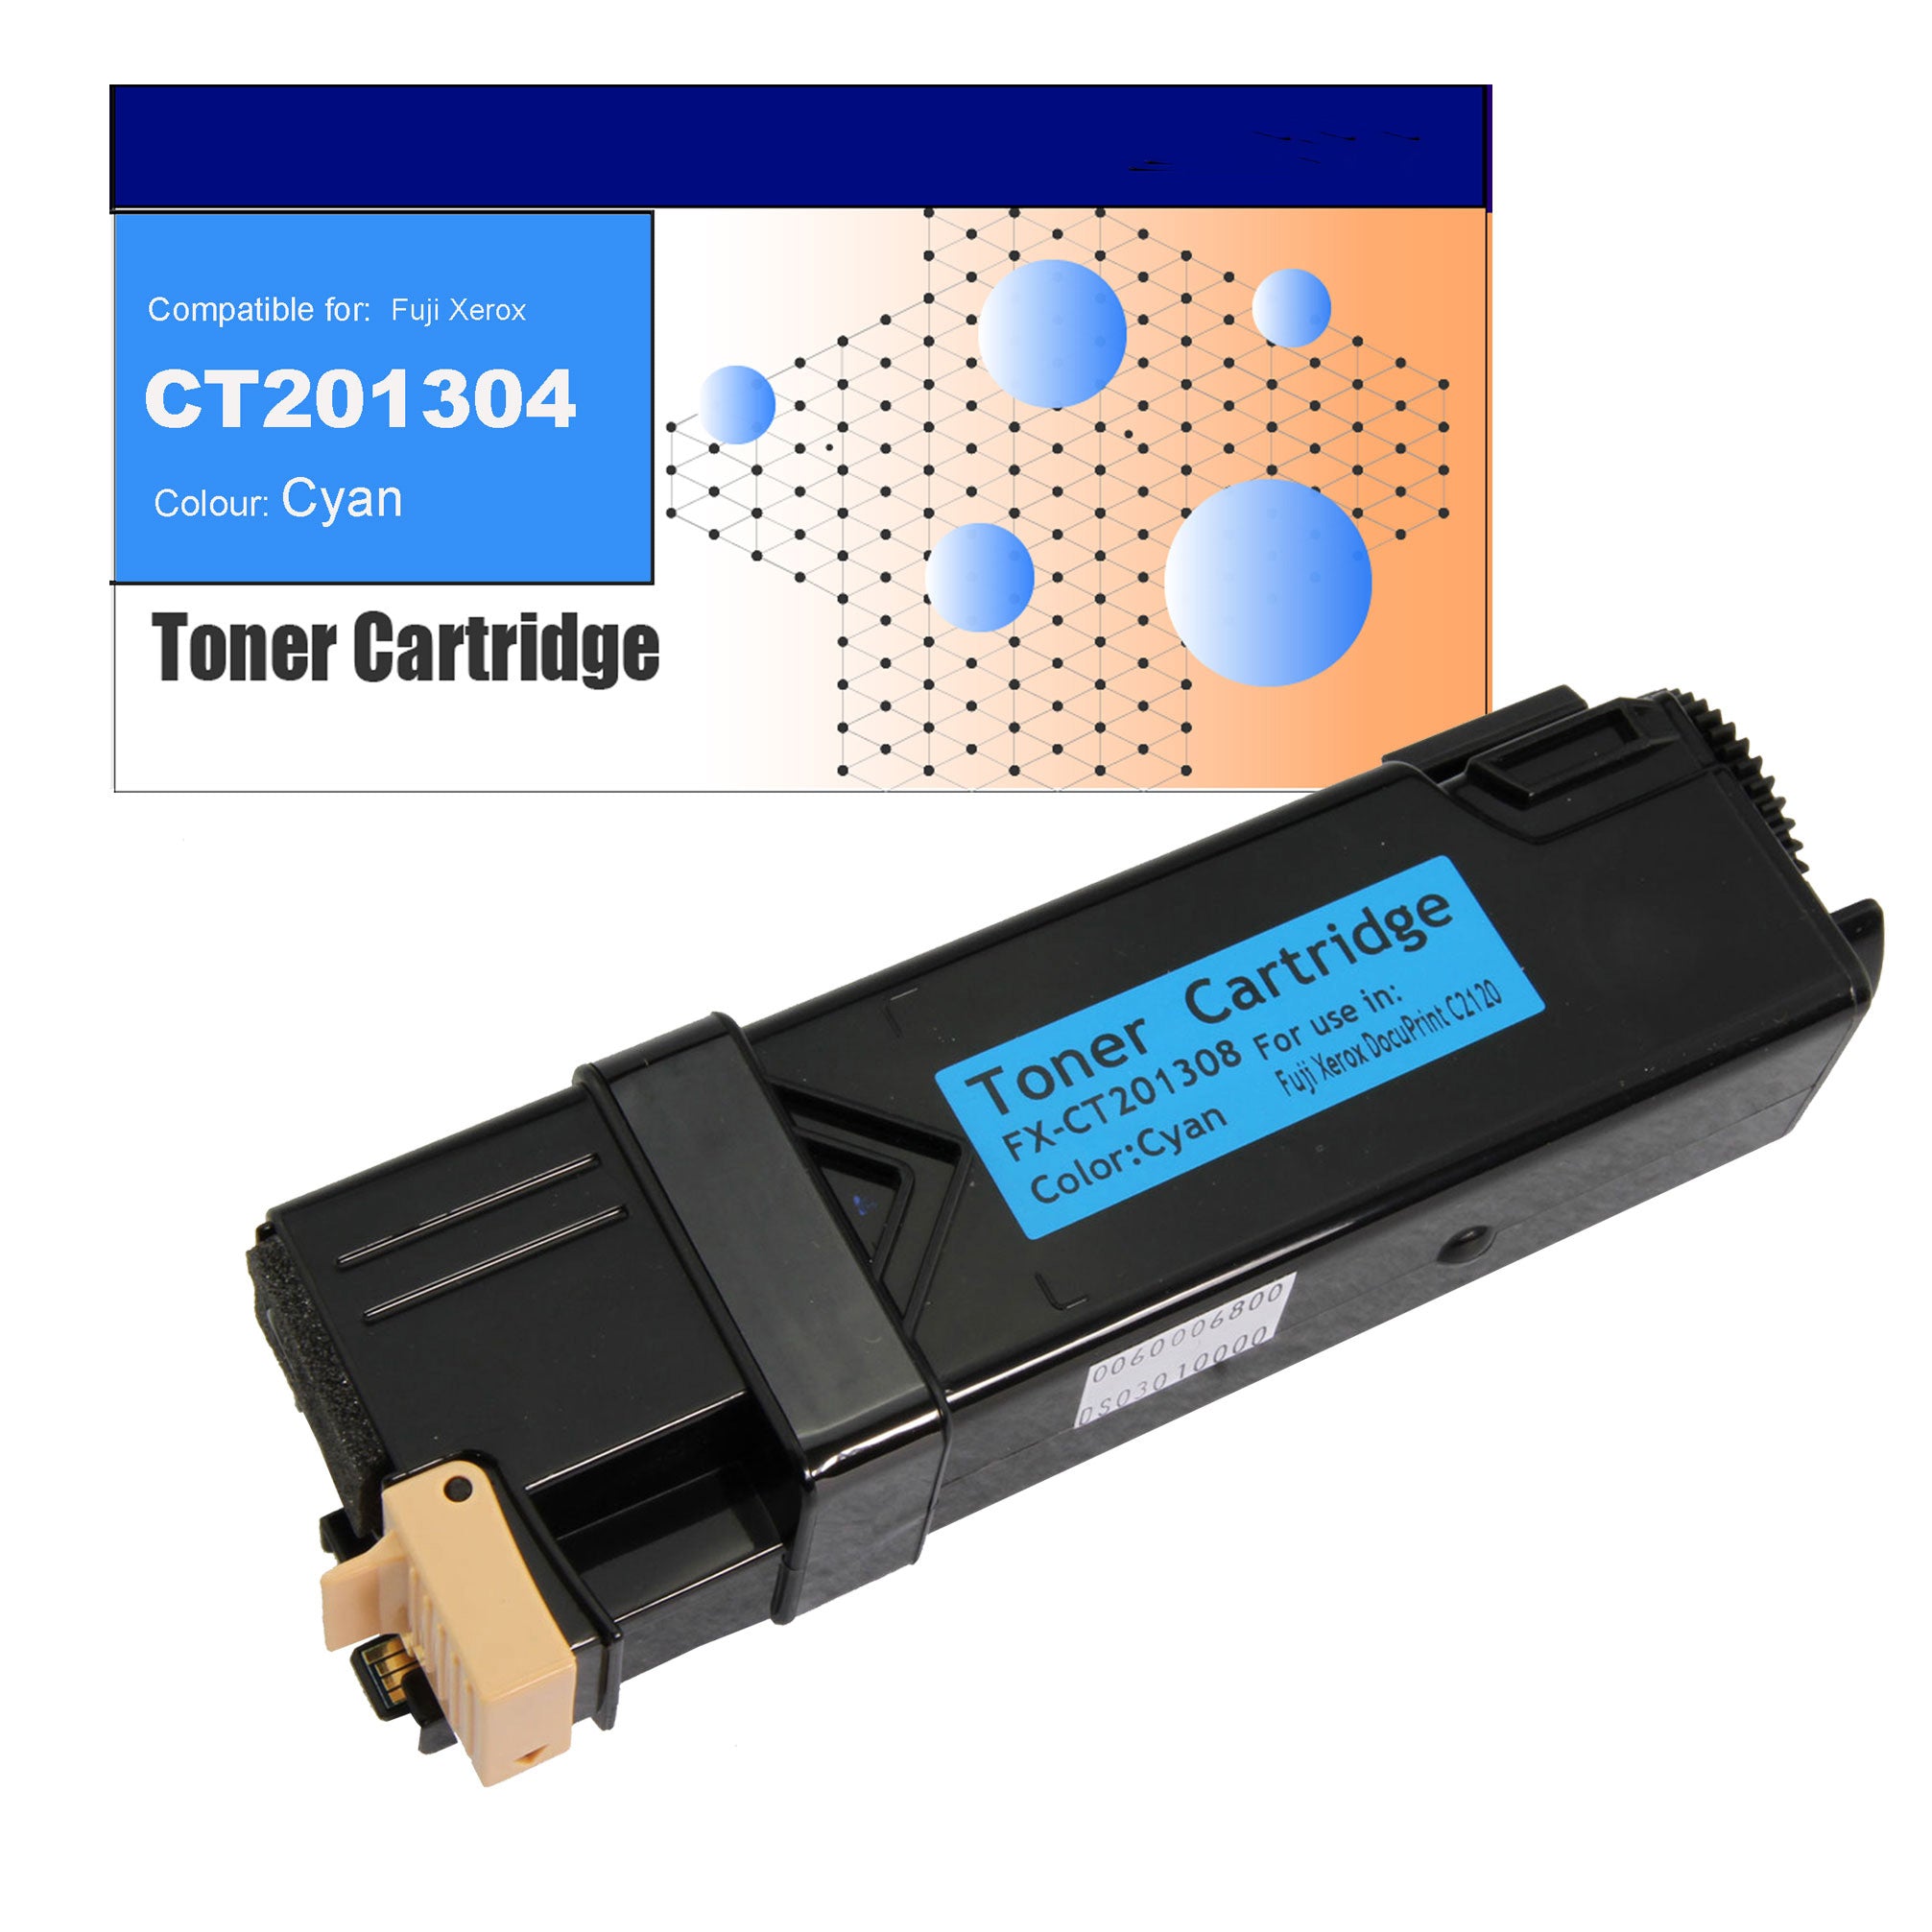 Compatible Toner for Fuji Xerox CT201304 (C2120) Cyan Toner Cartridges